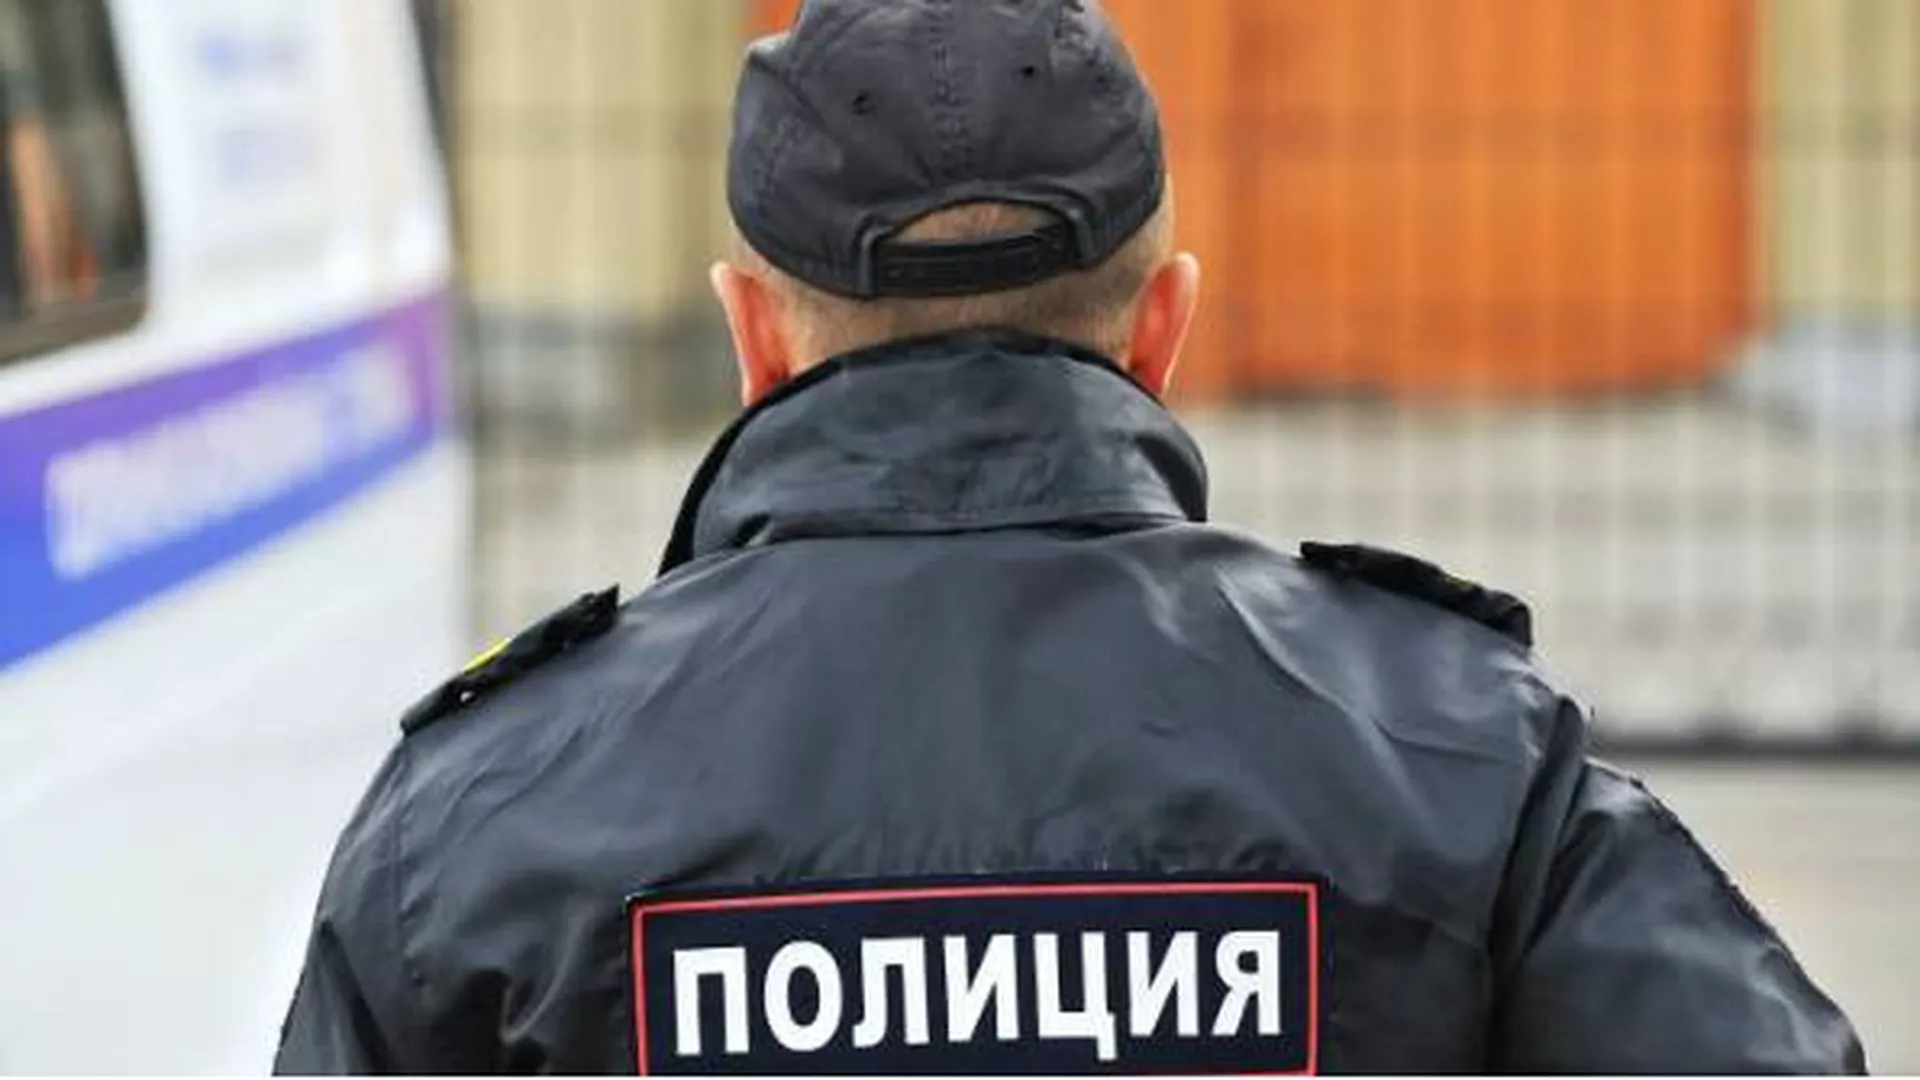 Атаковавший полицейских в Татарстане подросток не посещал мечети